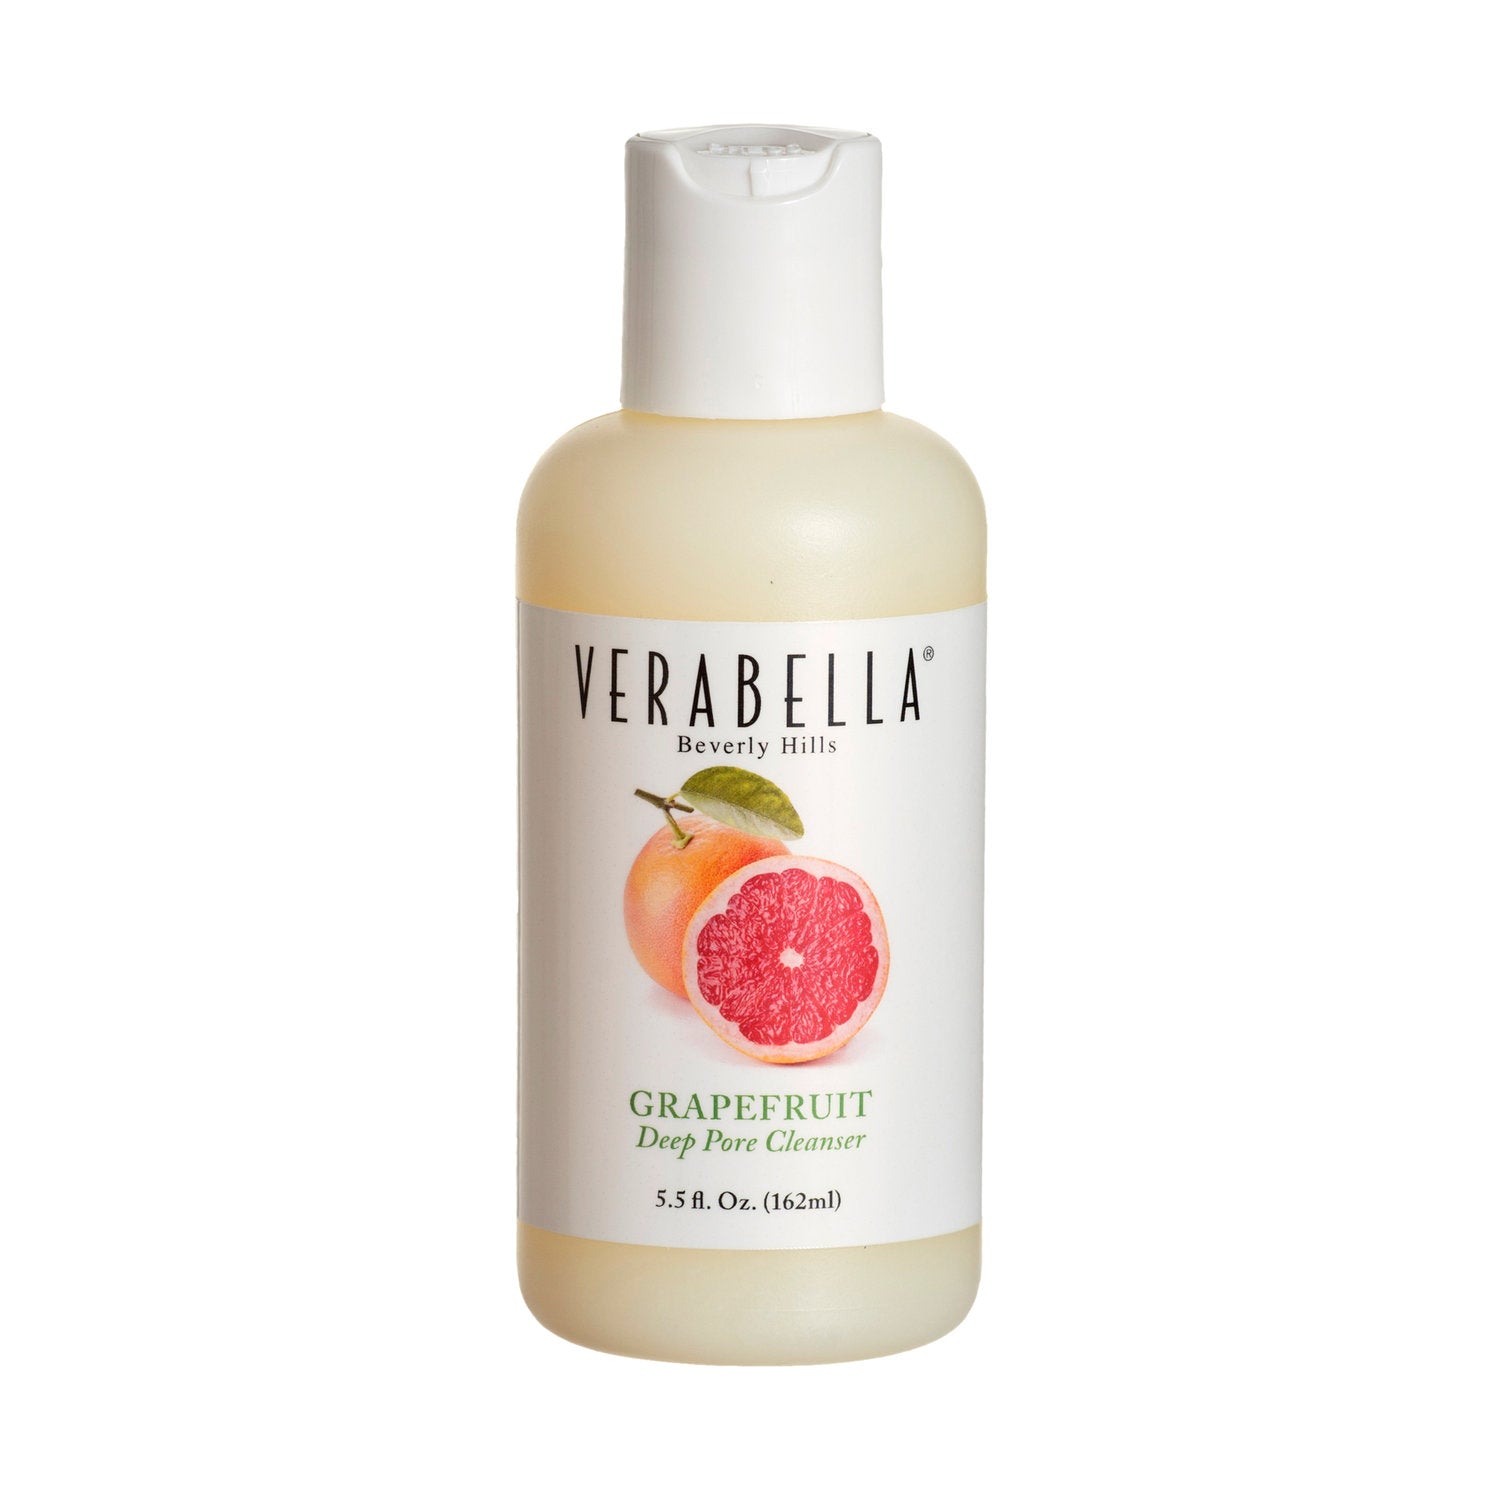 Verabella Grapefruit Deep Pore Cleanser product image